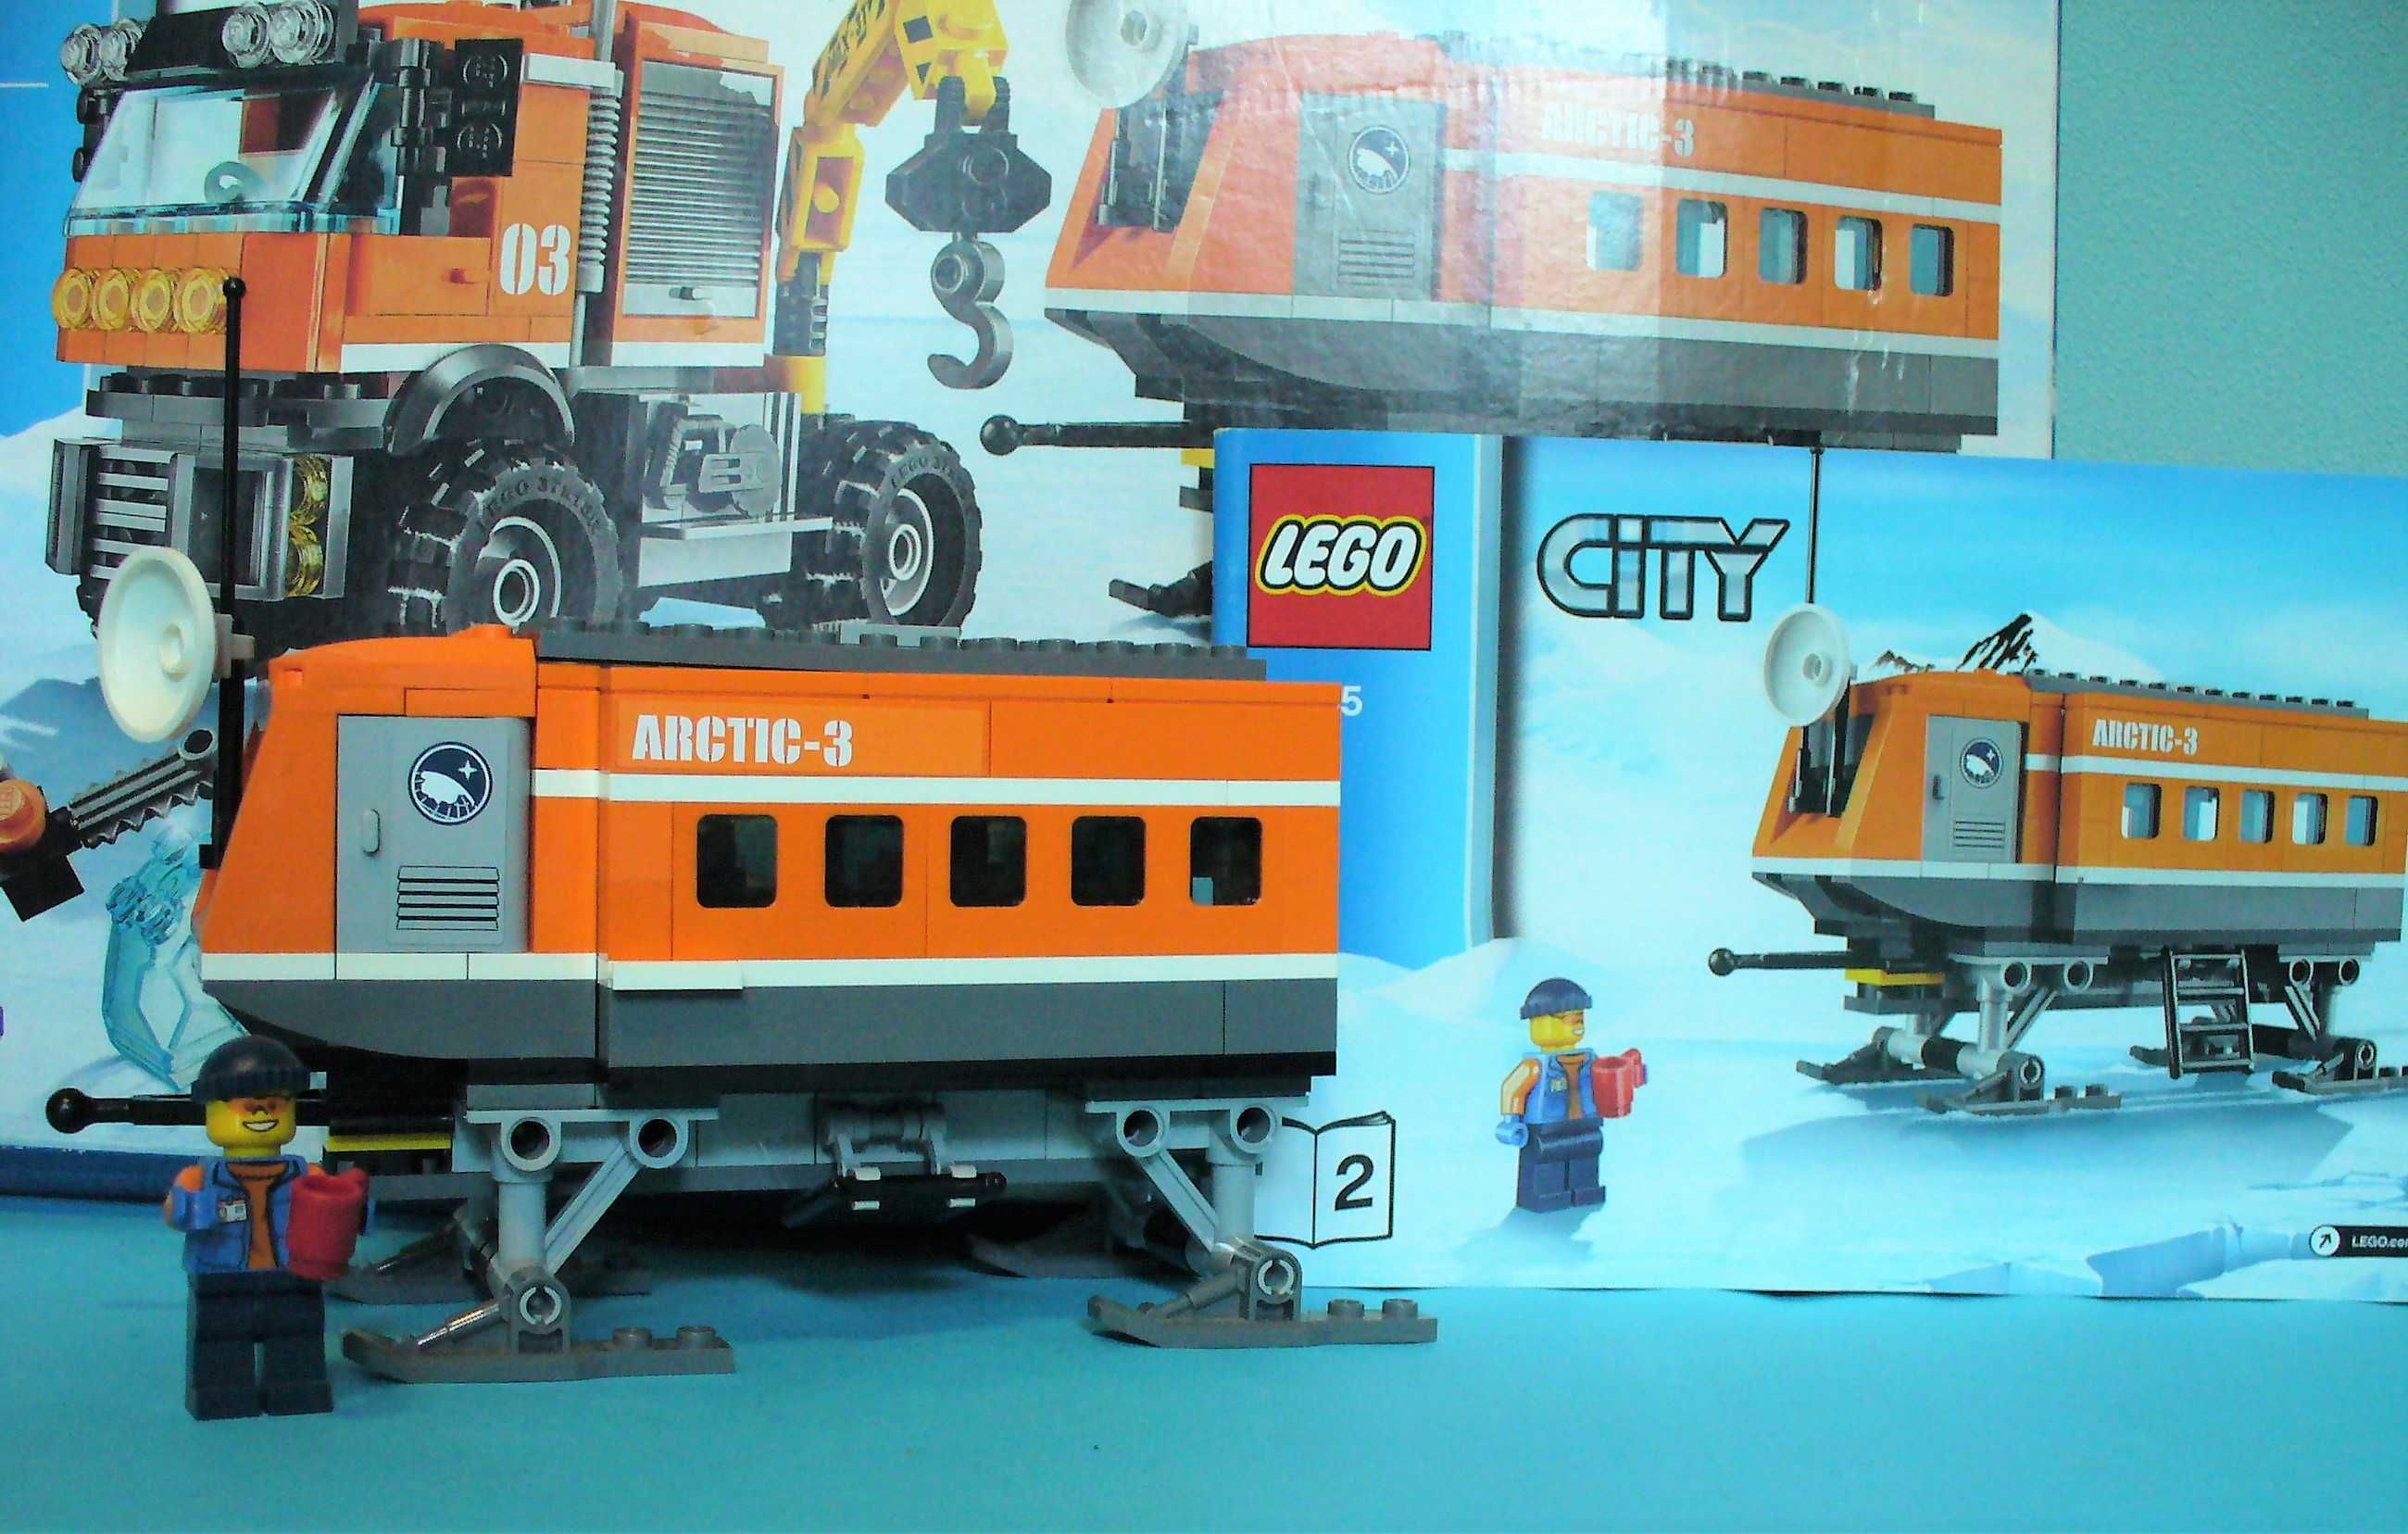 Lego City Арктическа експедиция модели 60032, 60033, 60034 и 60035